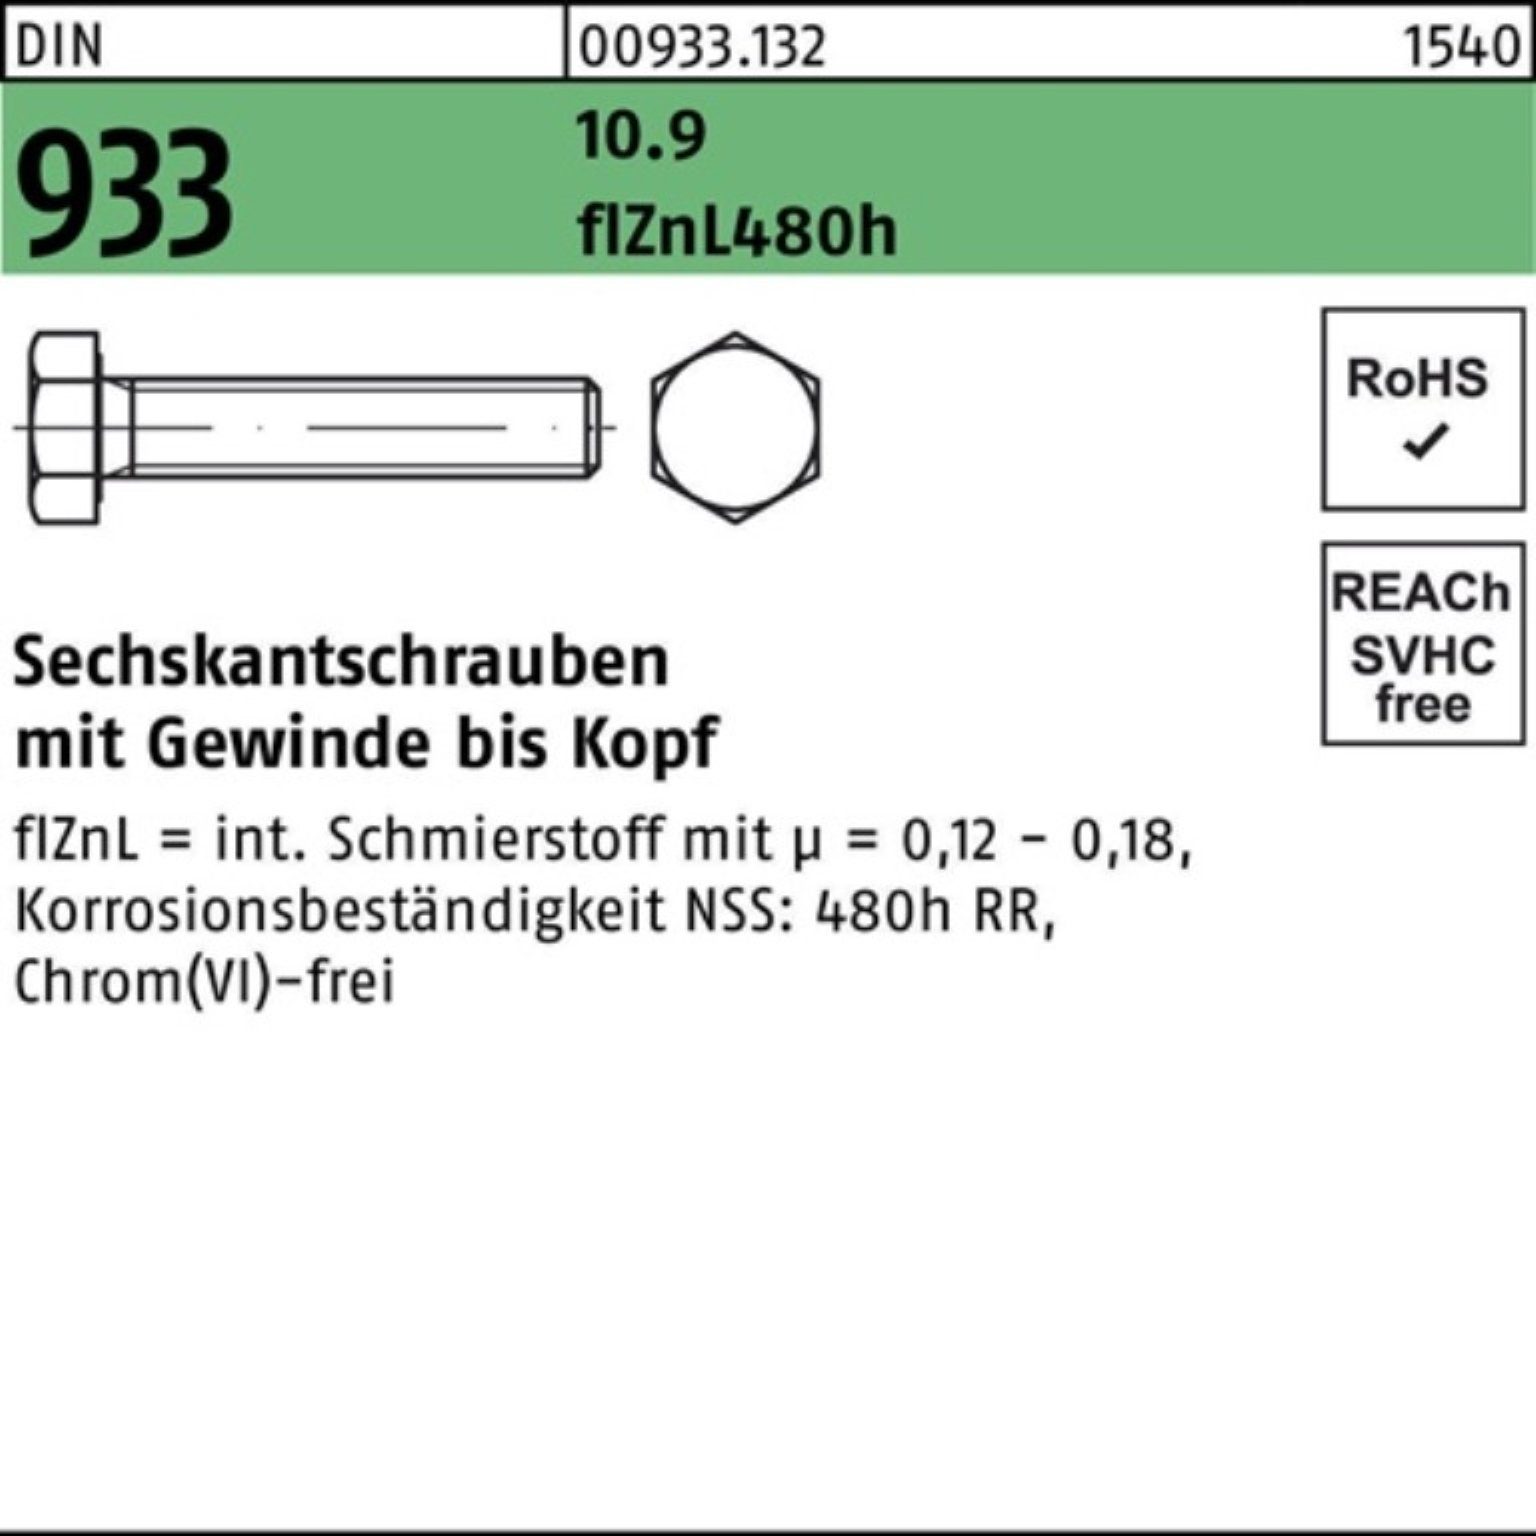 Reyher Sechskantschraube 500er Pack Sechskantschraube DIN 933 VG M6x 10 10.9 flZnL/nc/x/x/480h